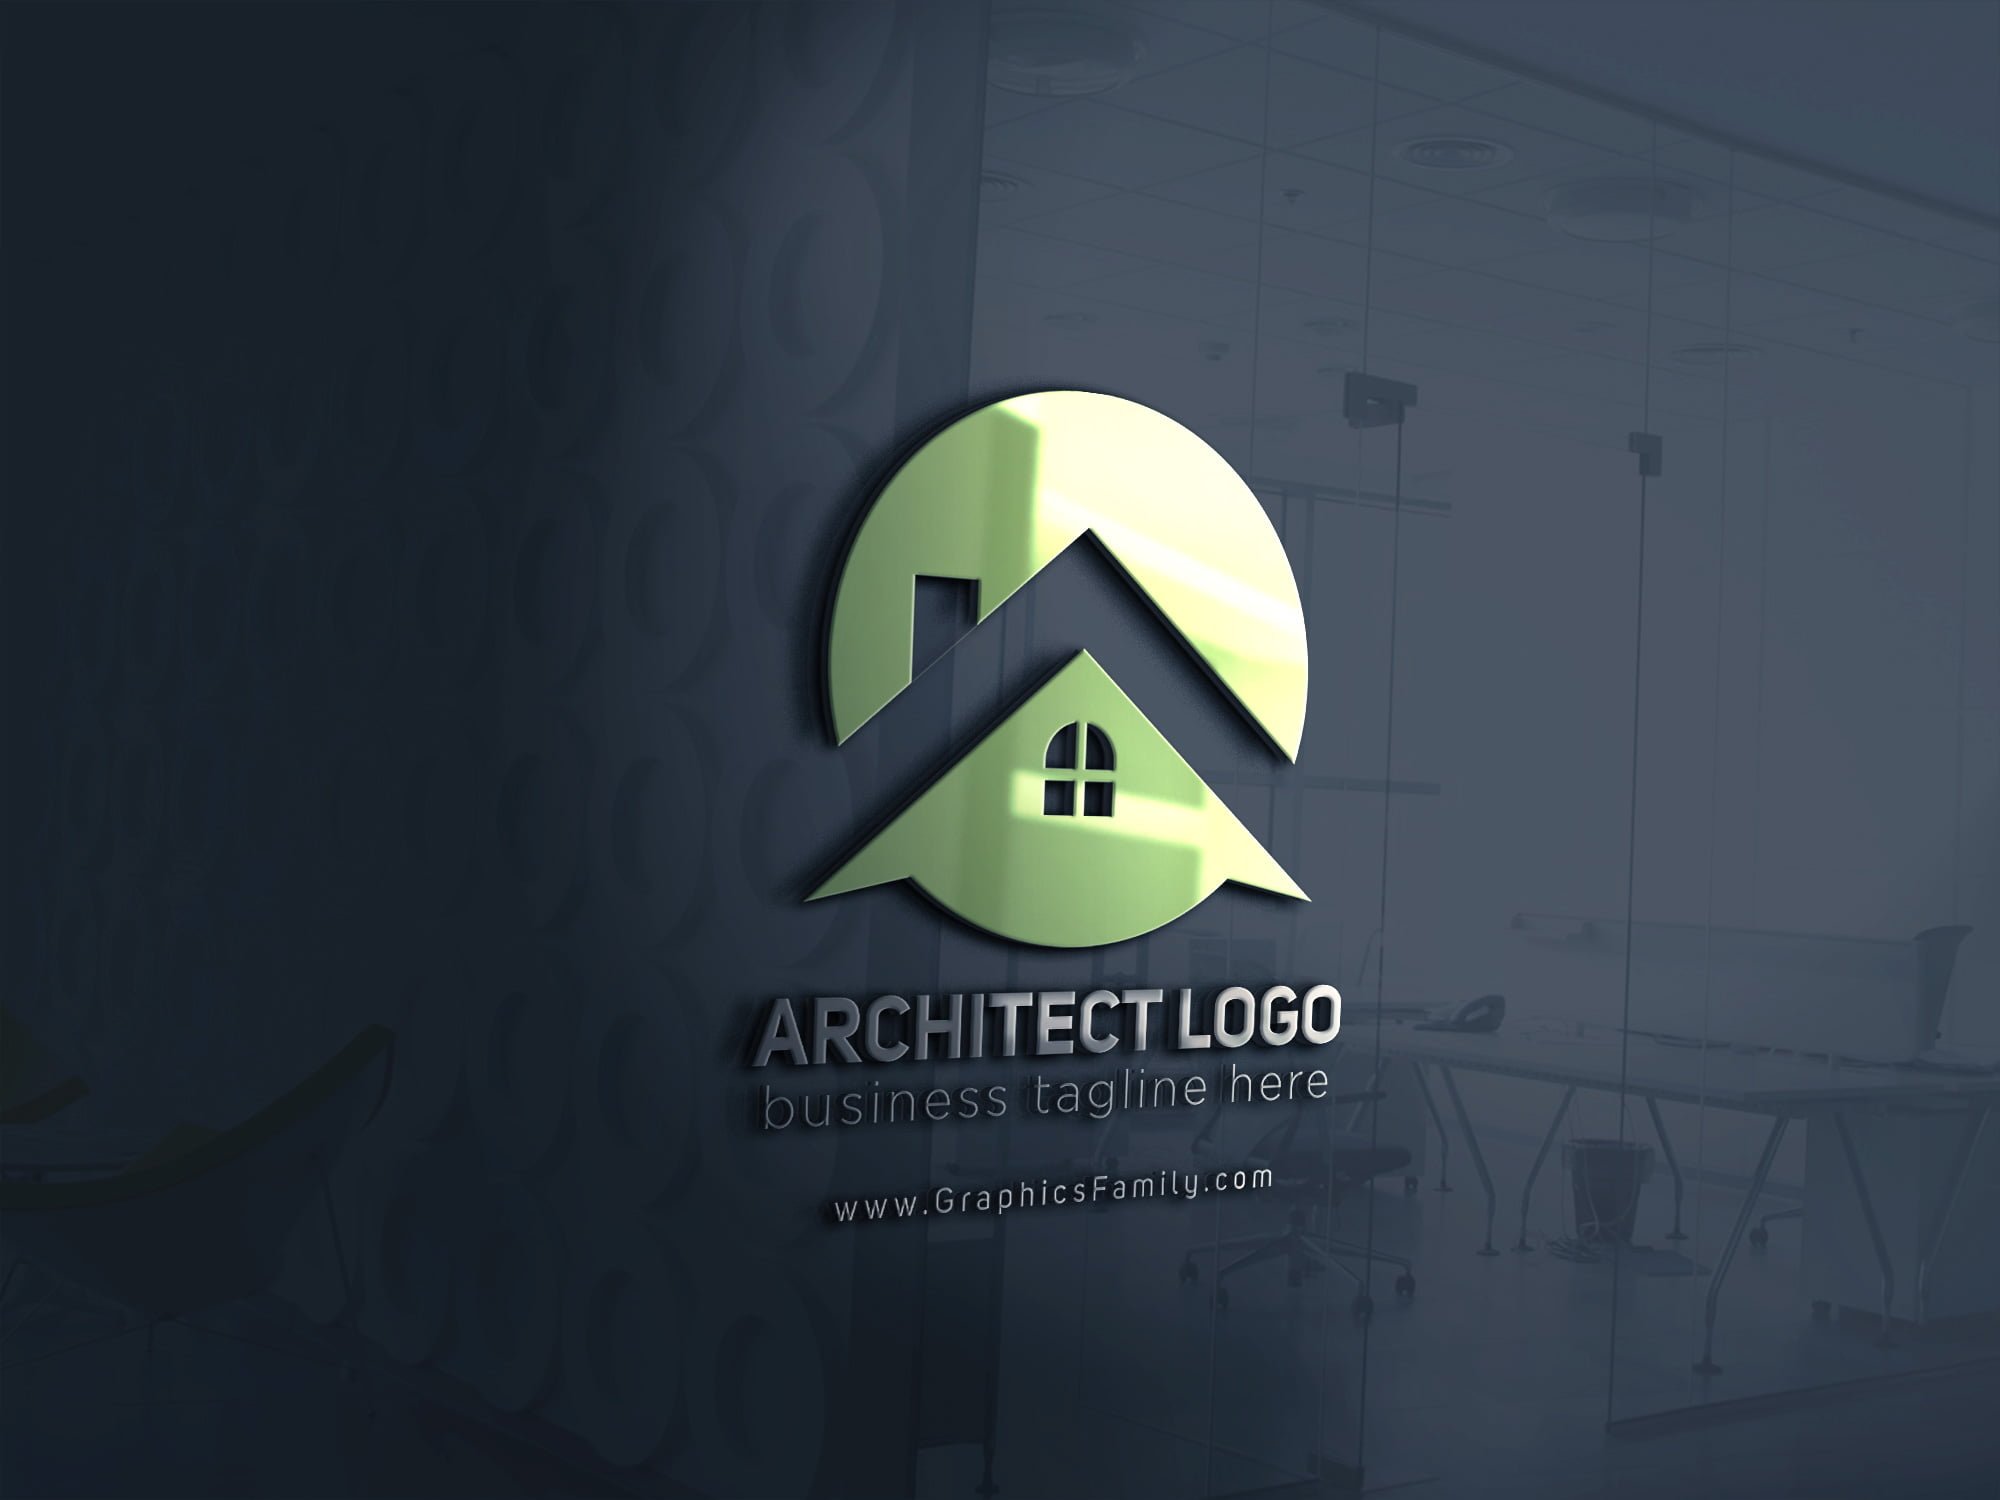 architecture logo ideas 2